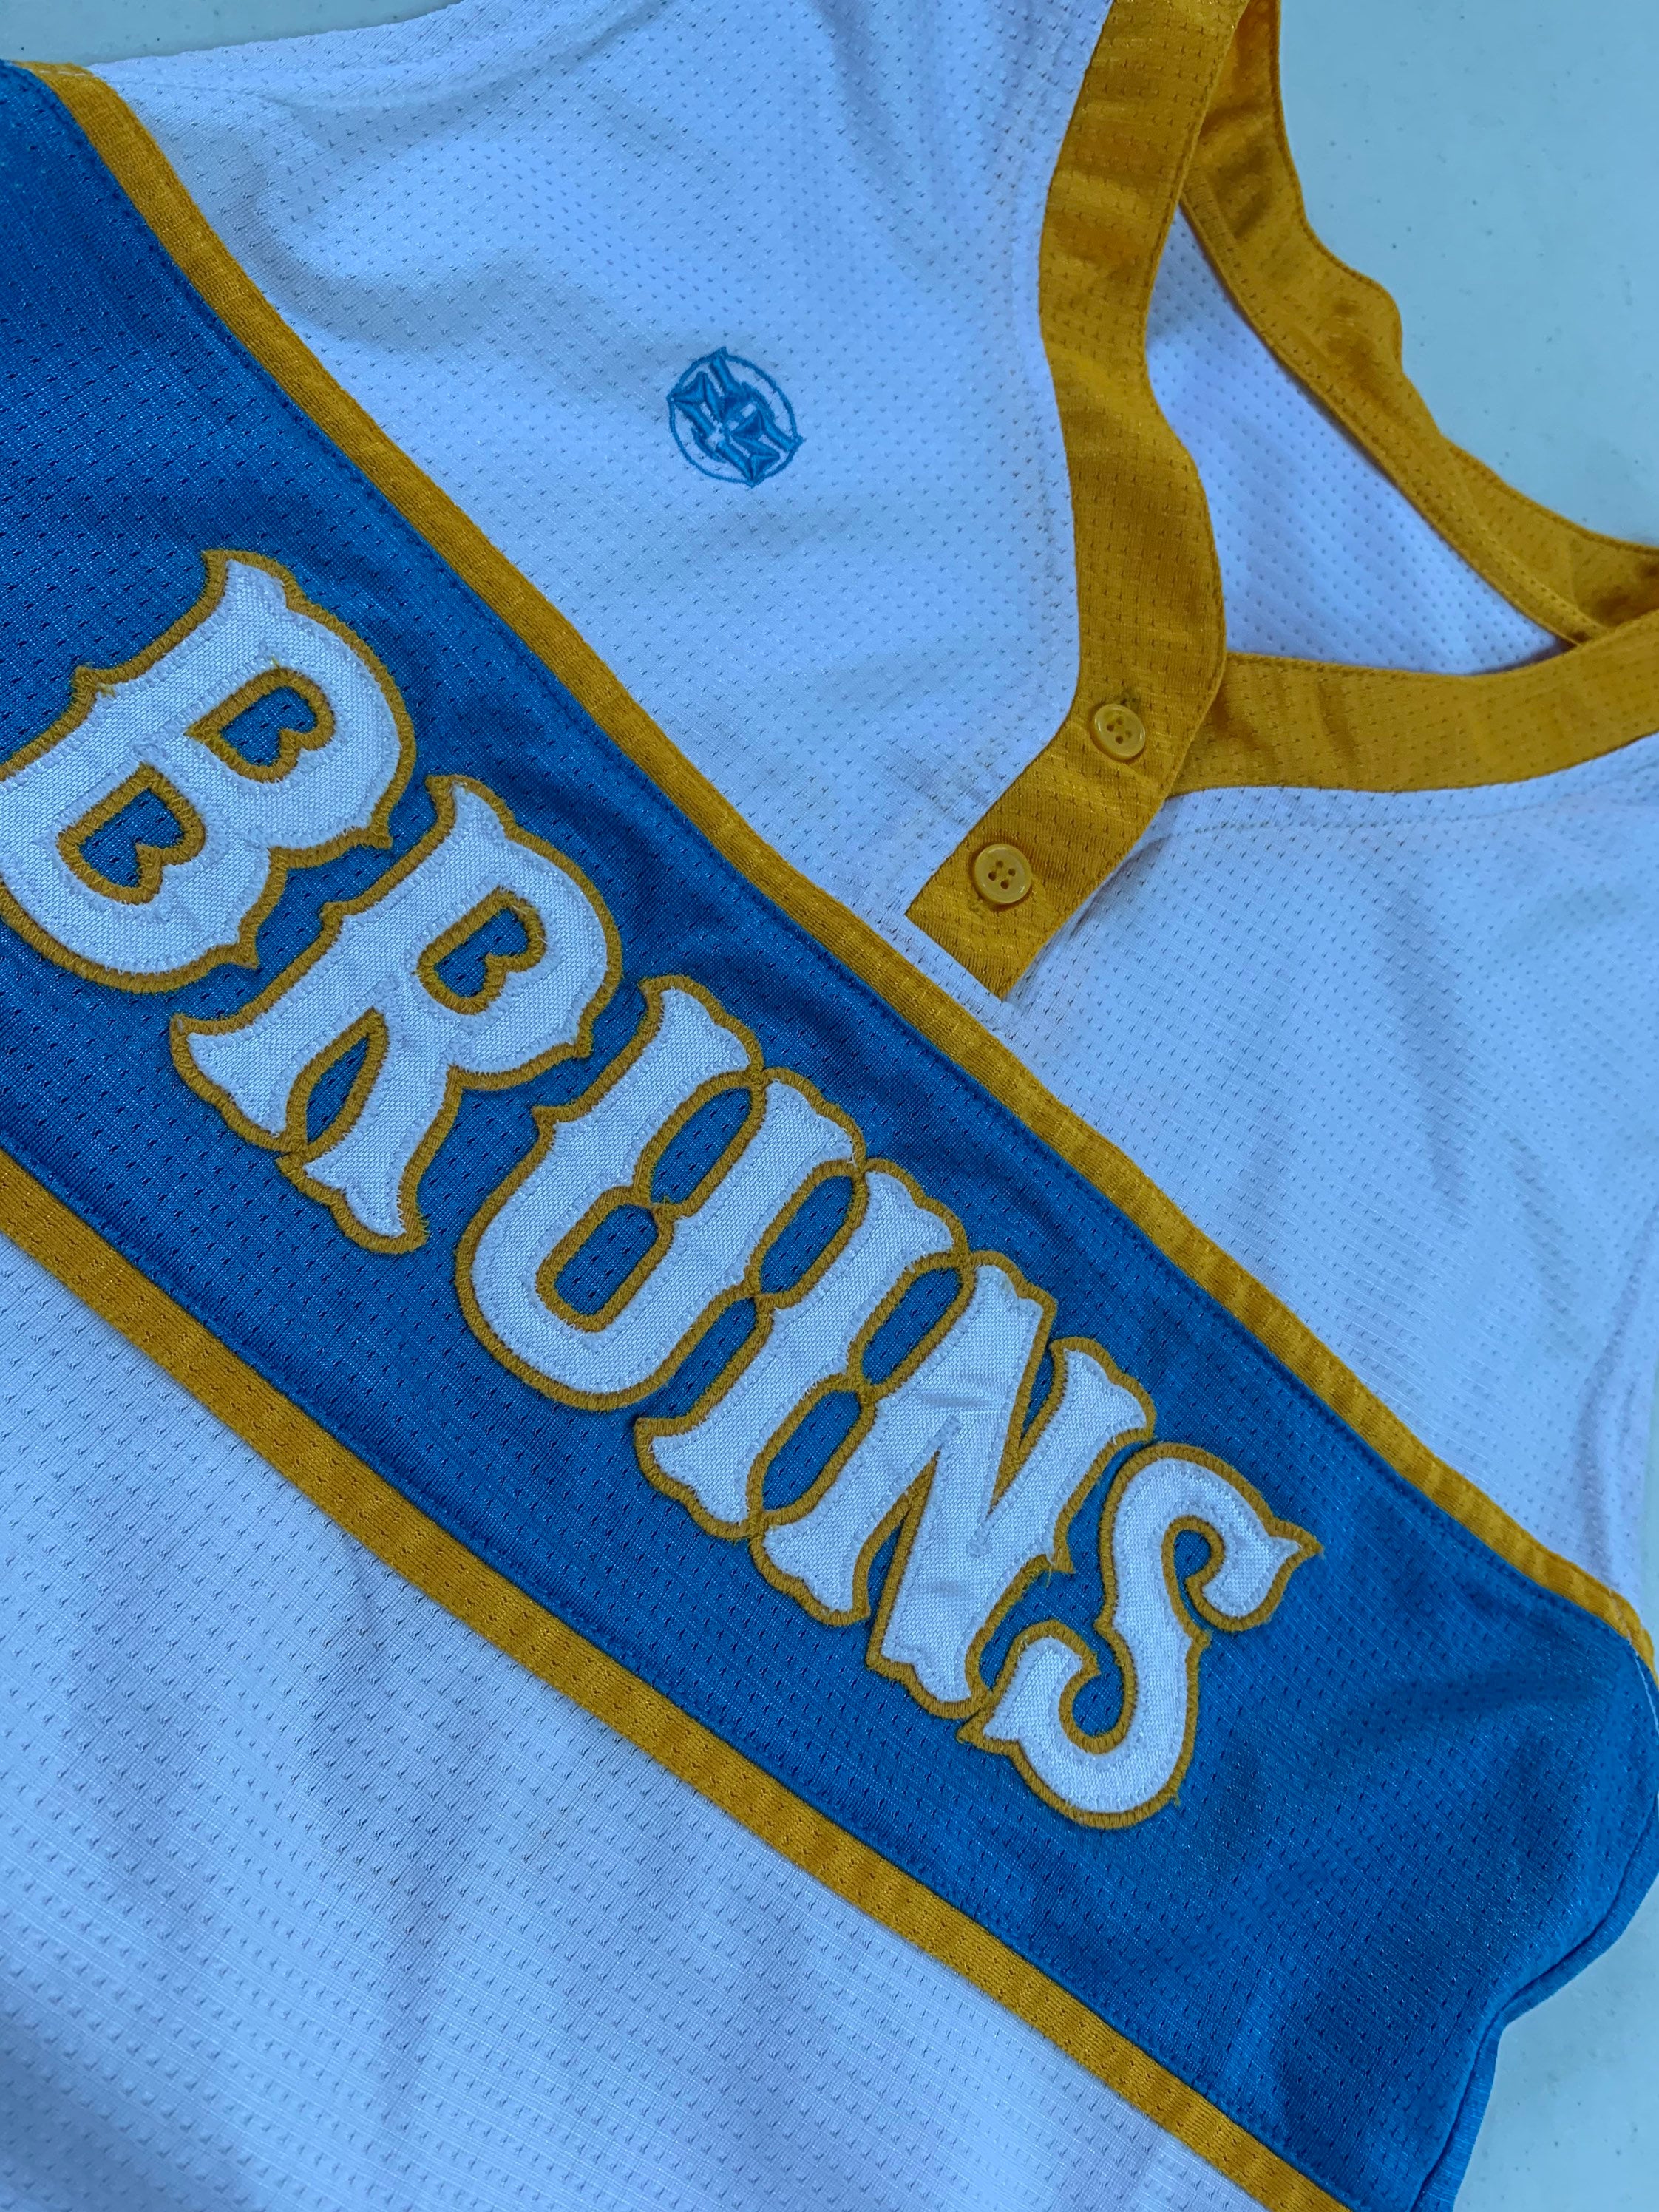 UCLA Bruins NCAA Custom Name And Number Camouflage Vintage Hawaiian Shirt  For Men And Women - Banantees